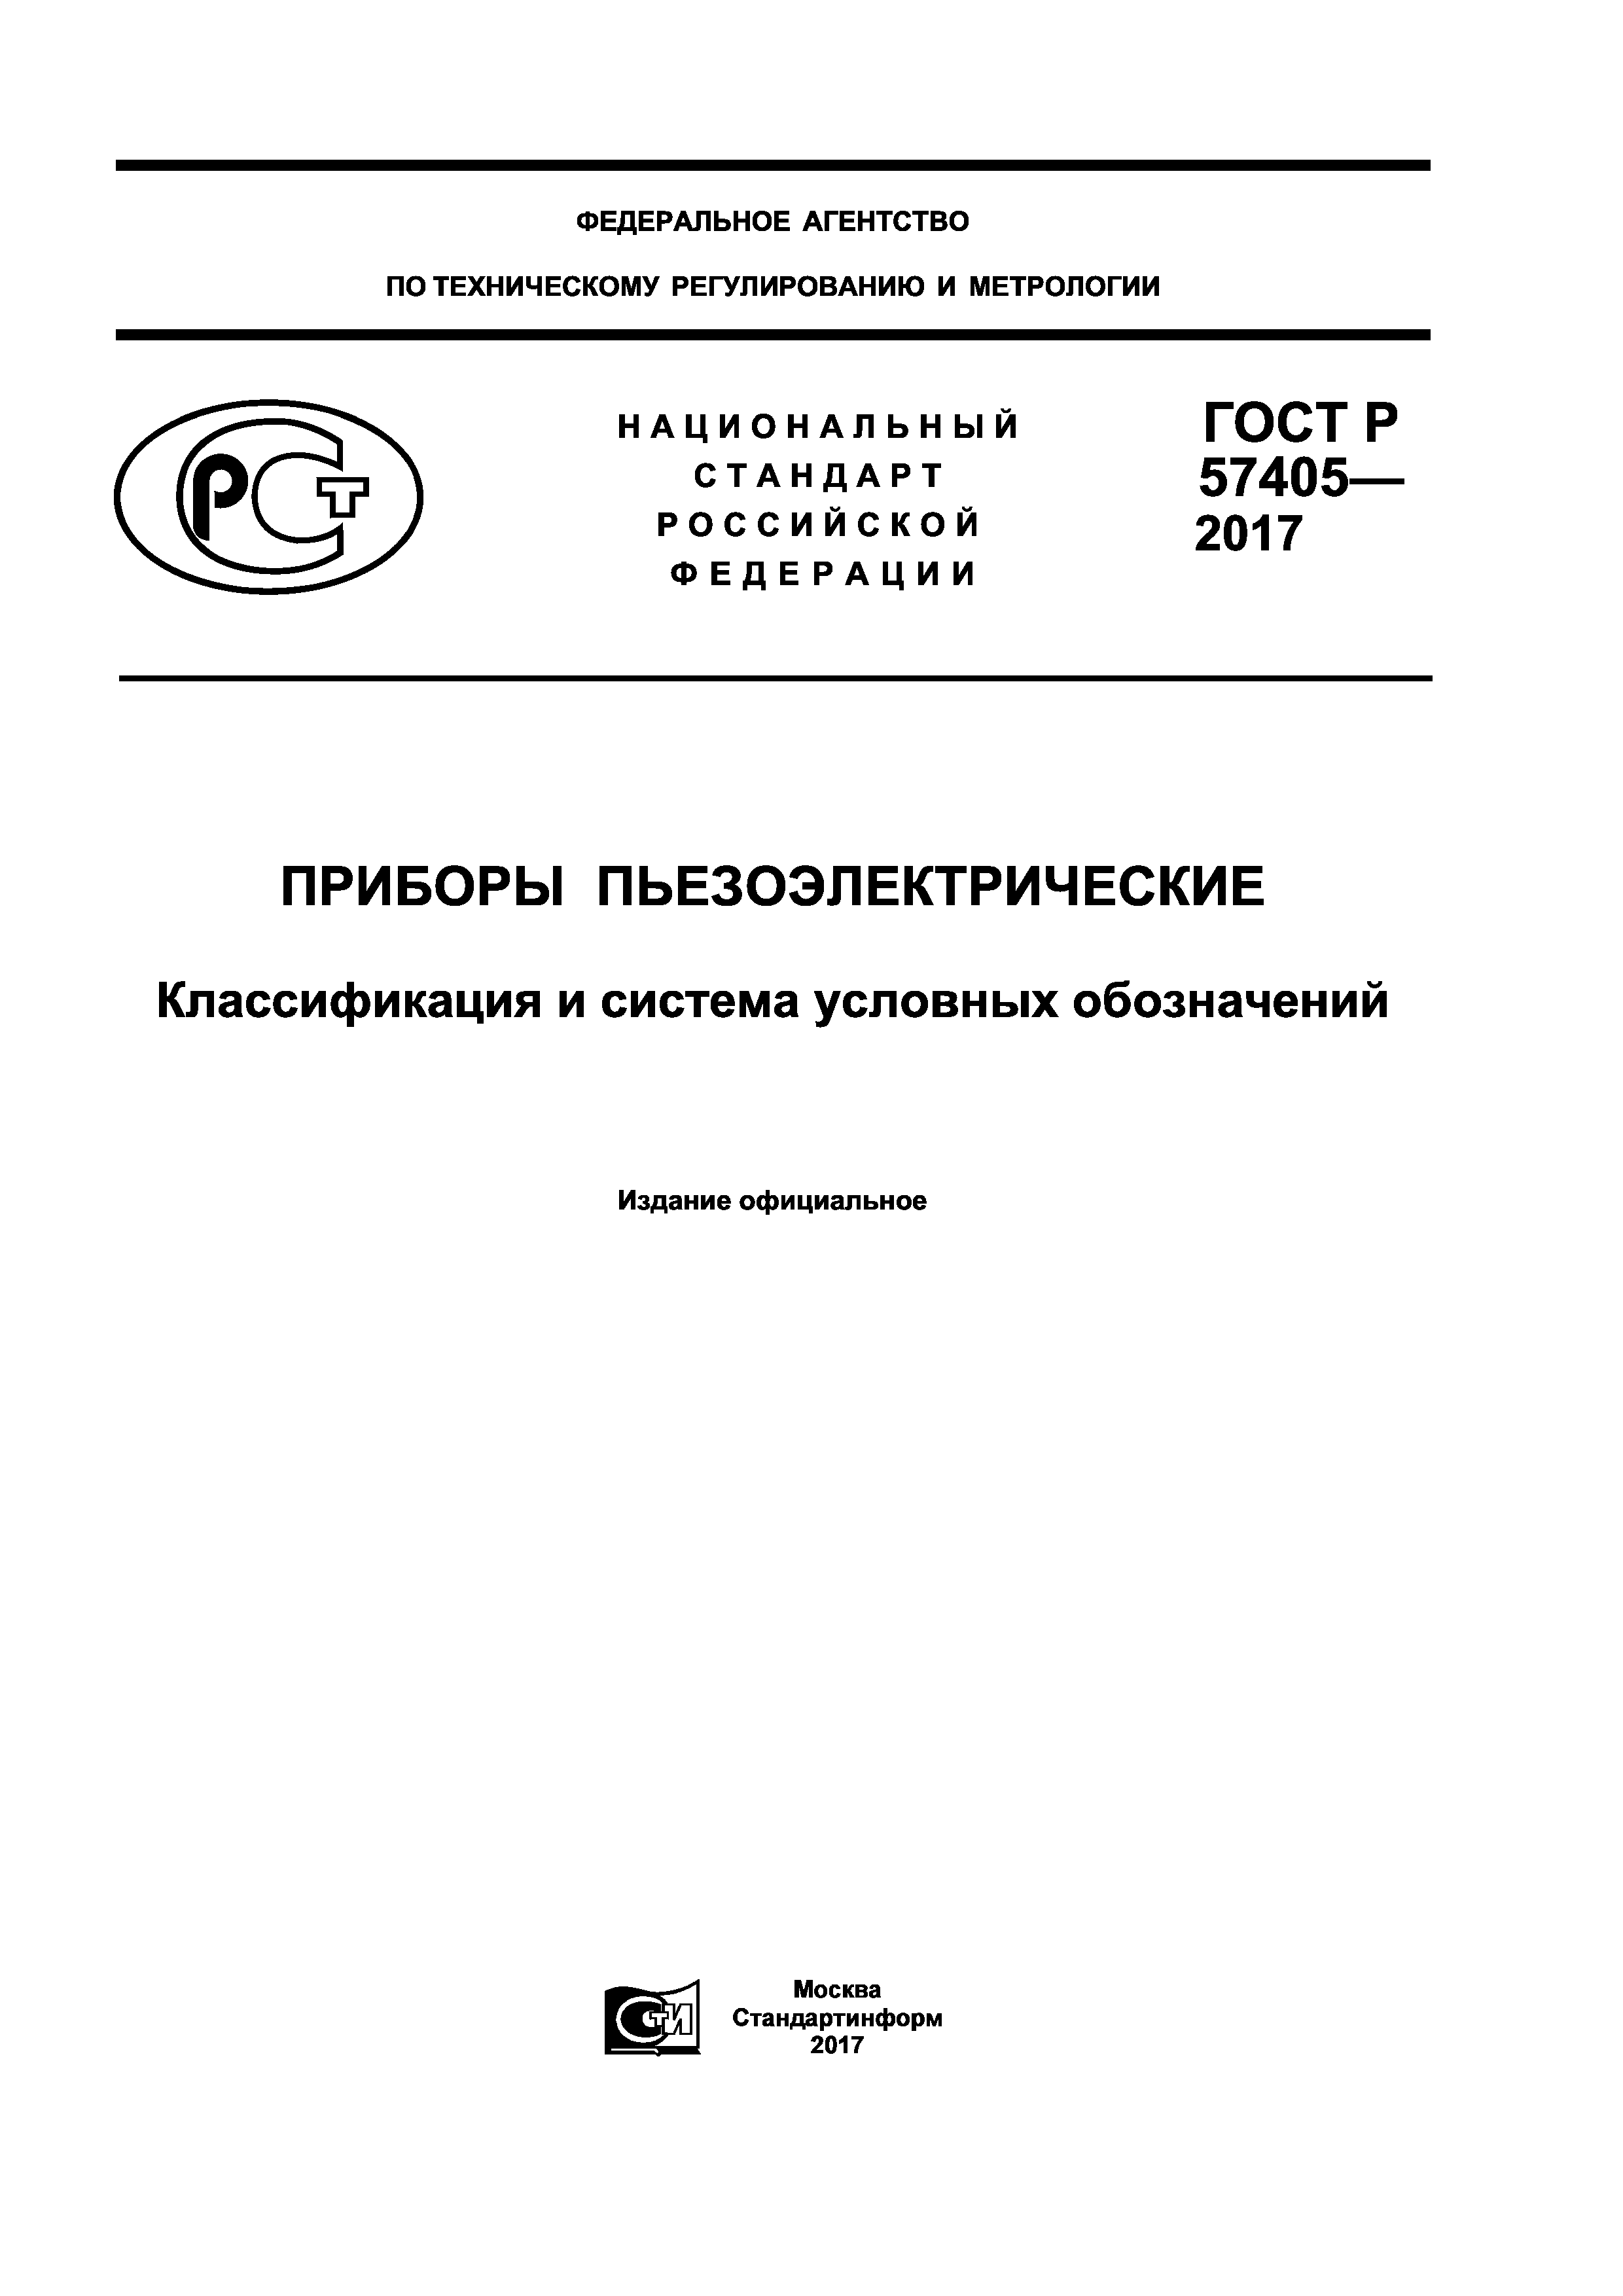 ГОСТ Р 57405-2017